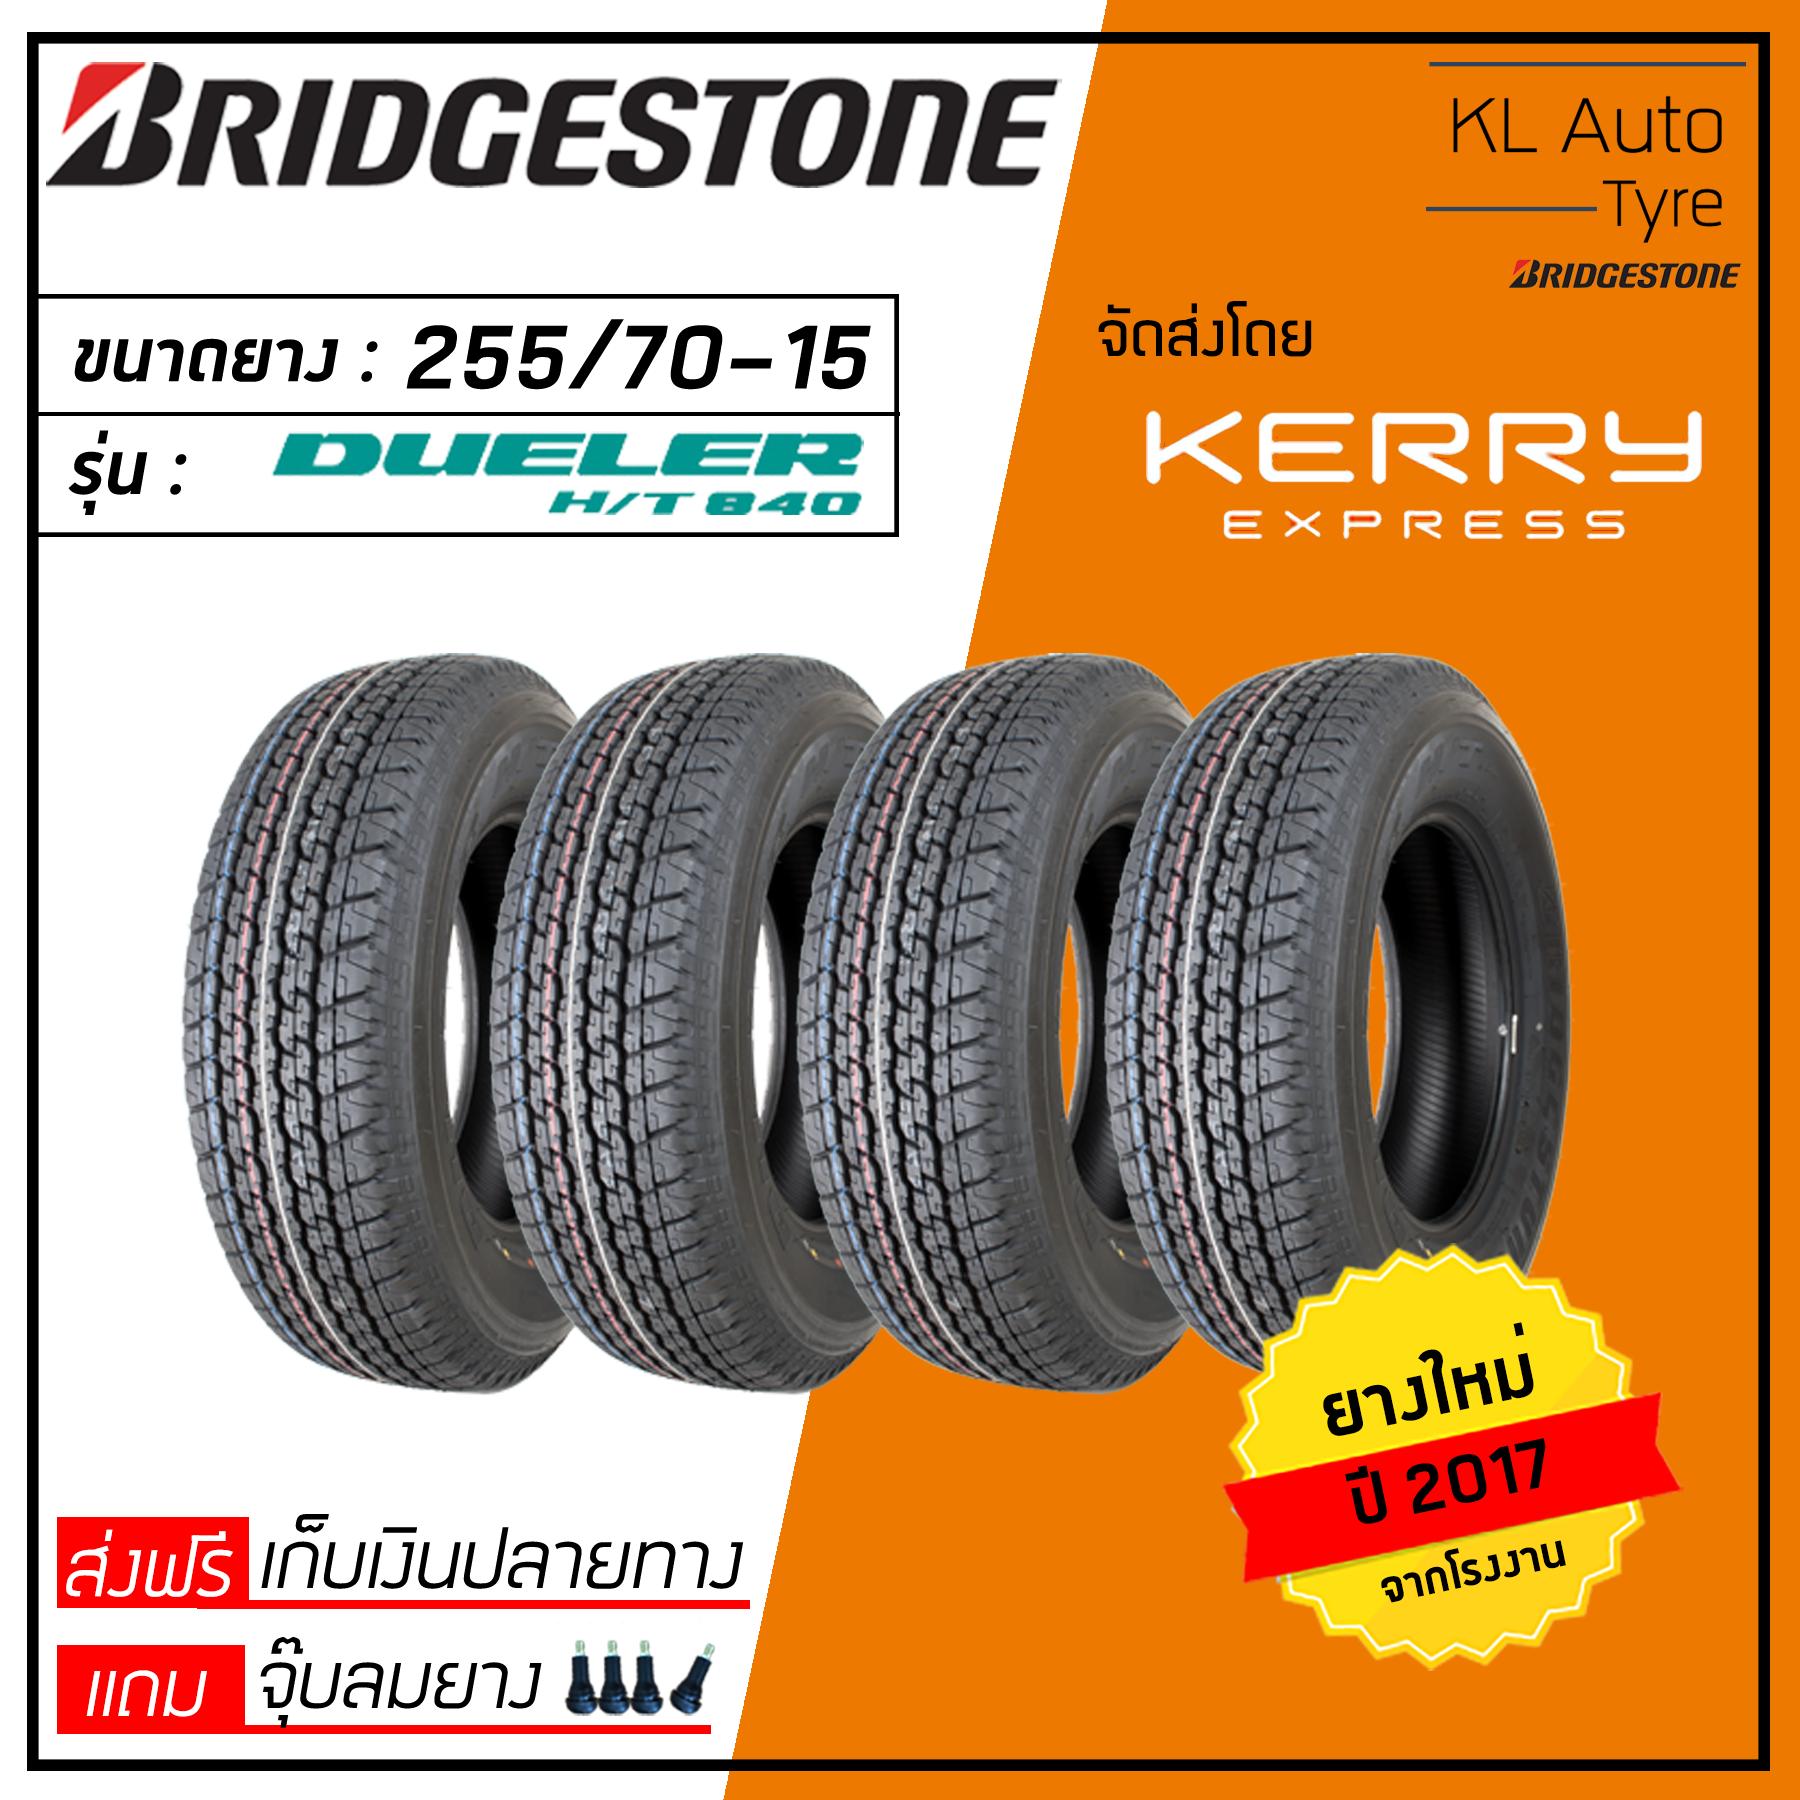 Bridgestone 255/70-15 D840 4 เส้น ปี 17 (ฟรี จุ๊บยาง 4 ตัว มูลค่า 200 บาท)